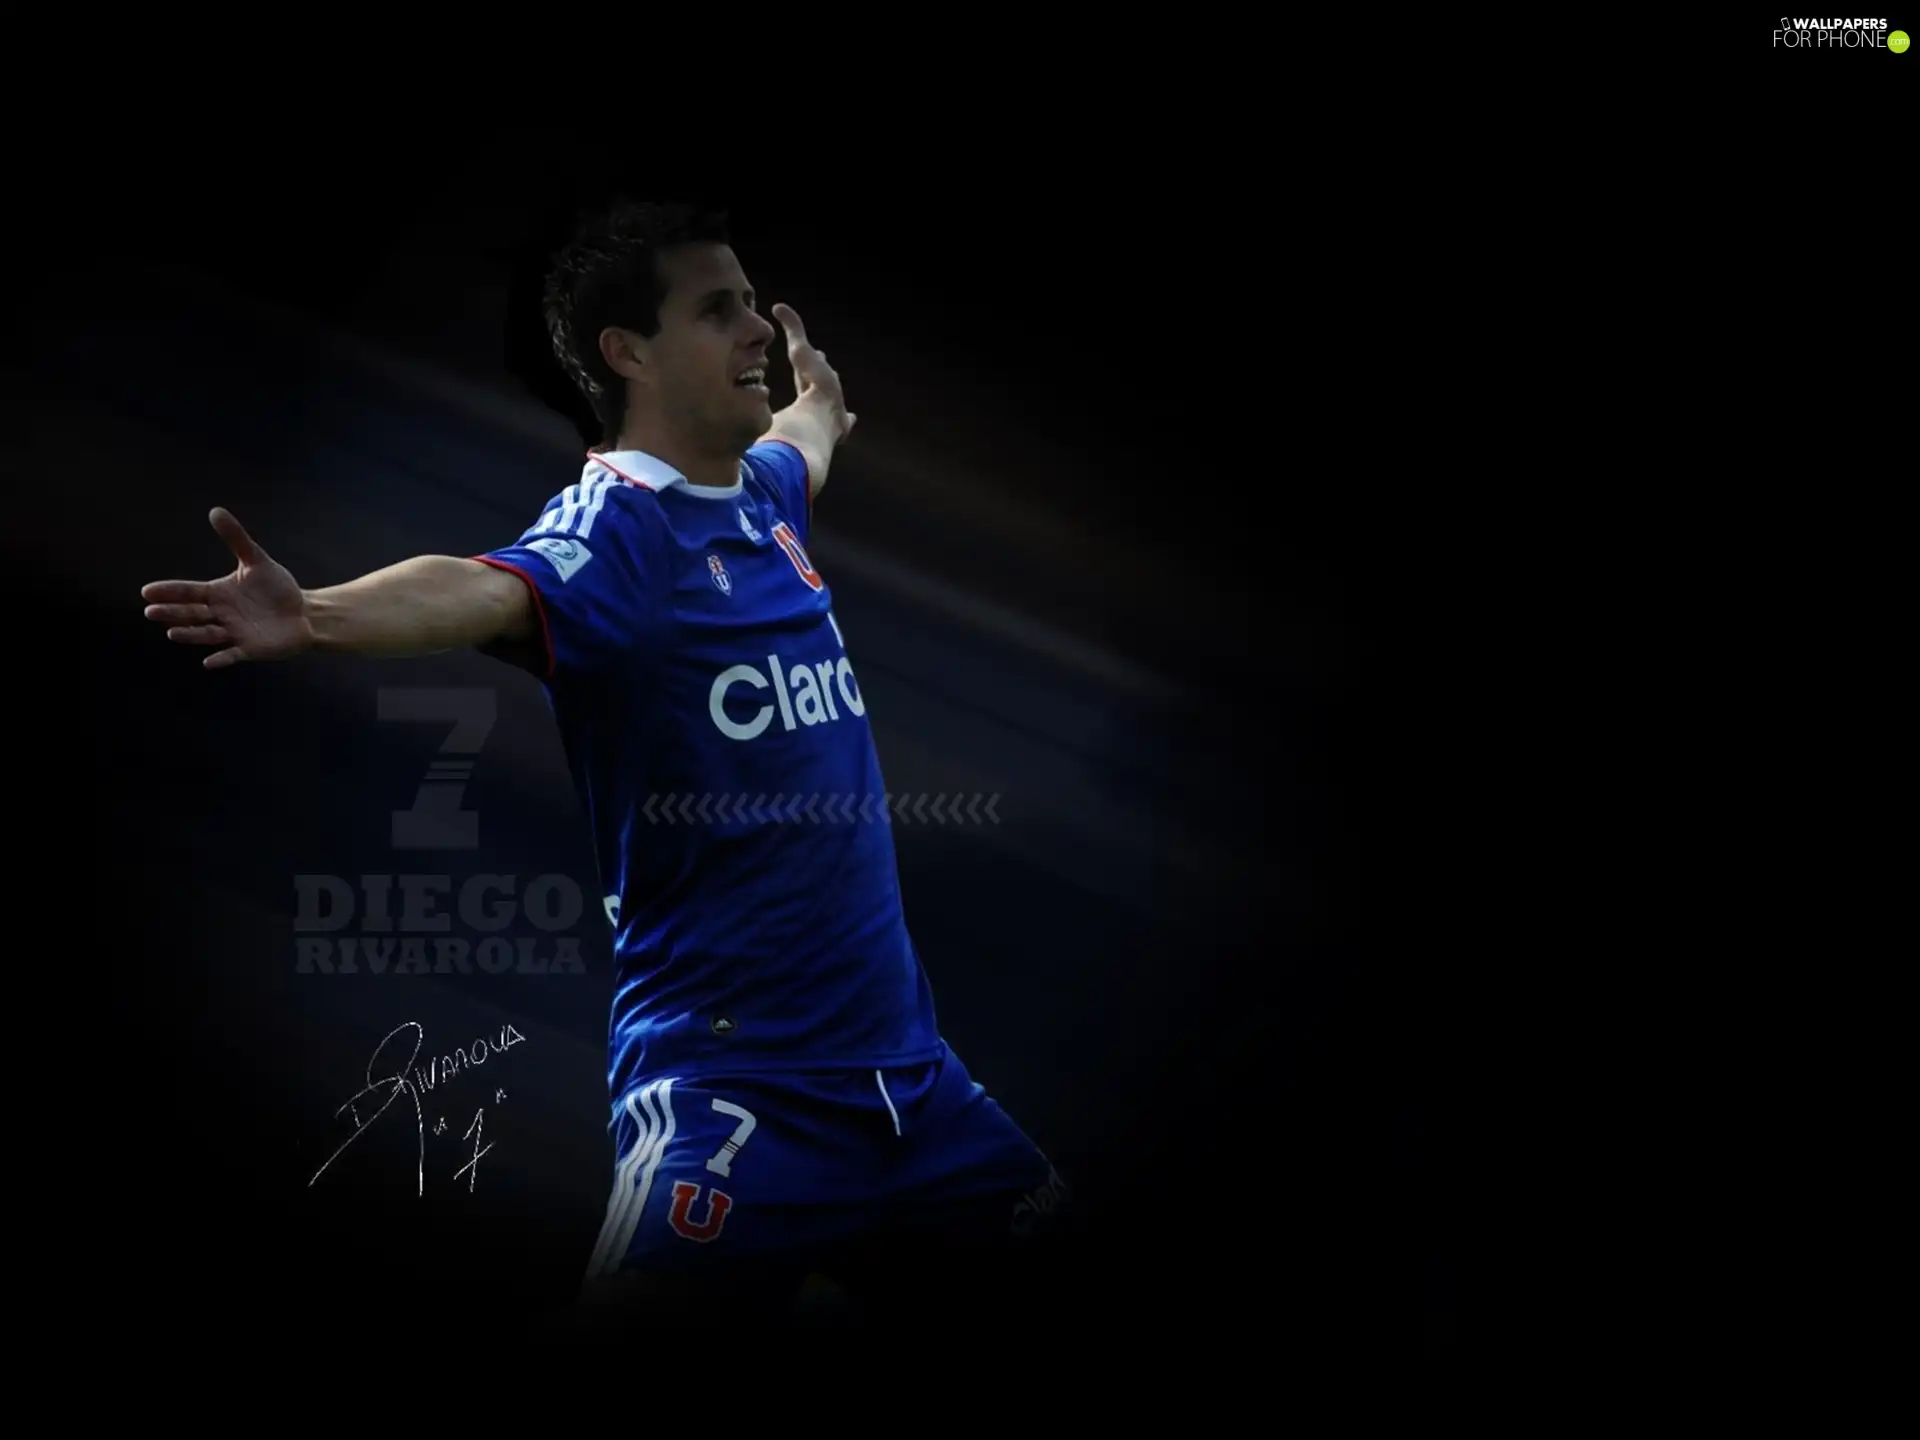 autograph, Diego Rivarola, footballer